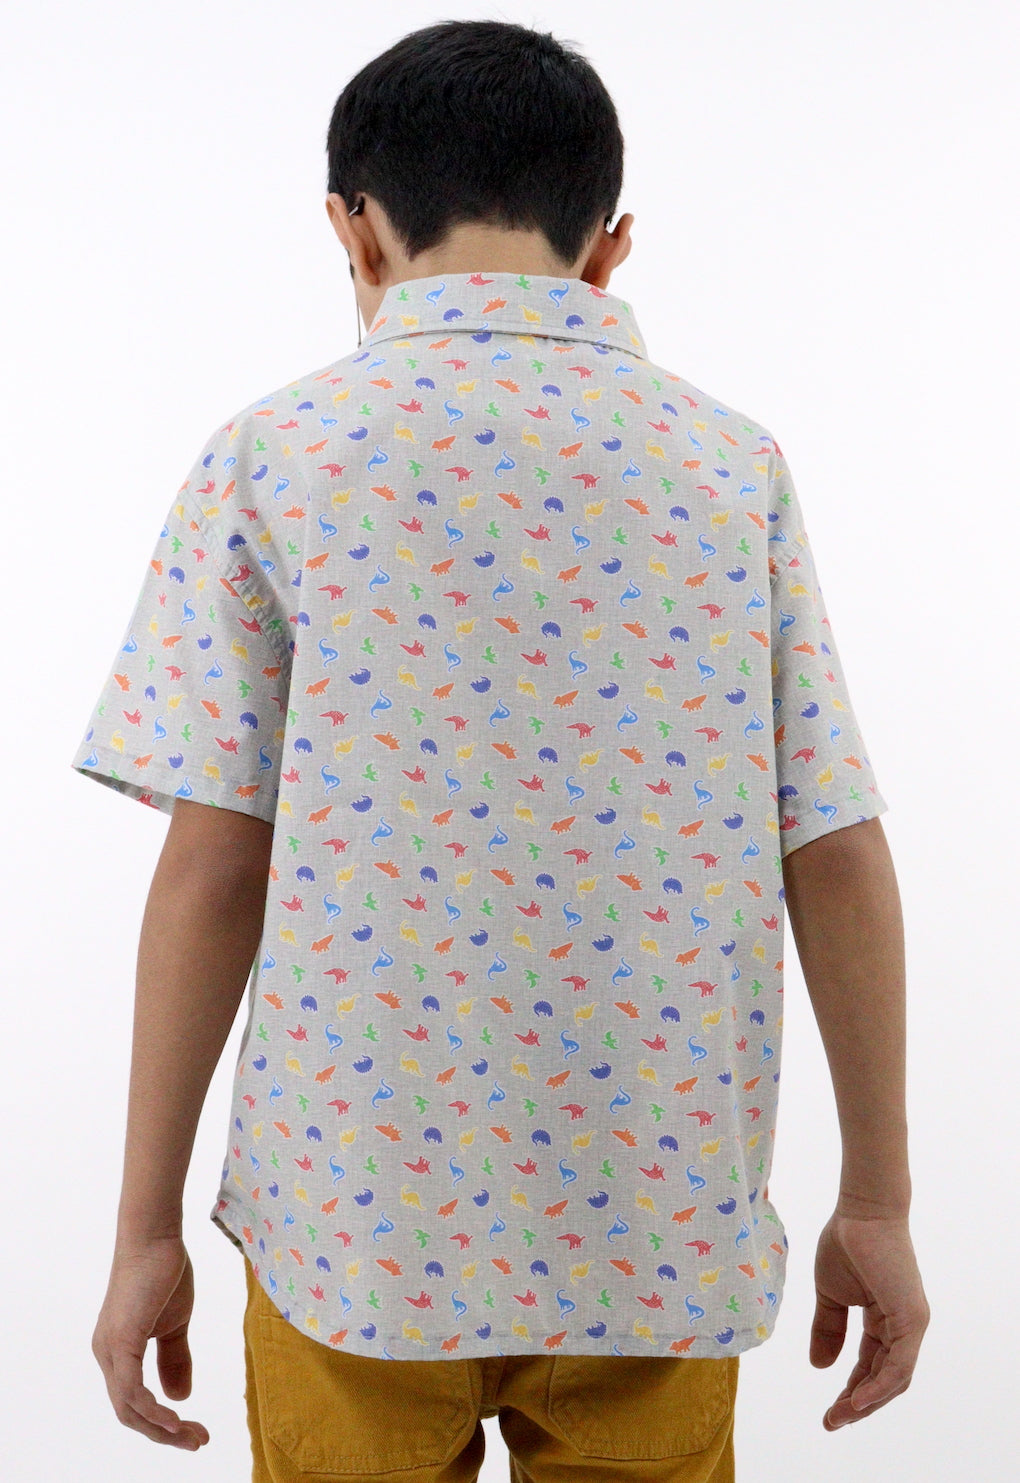 Camisa manga corta con print de dinosaurios